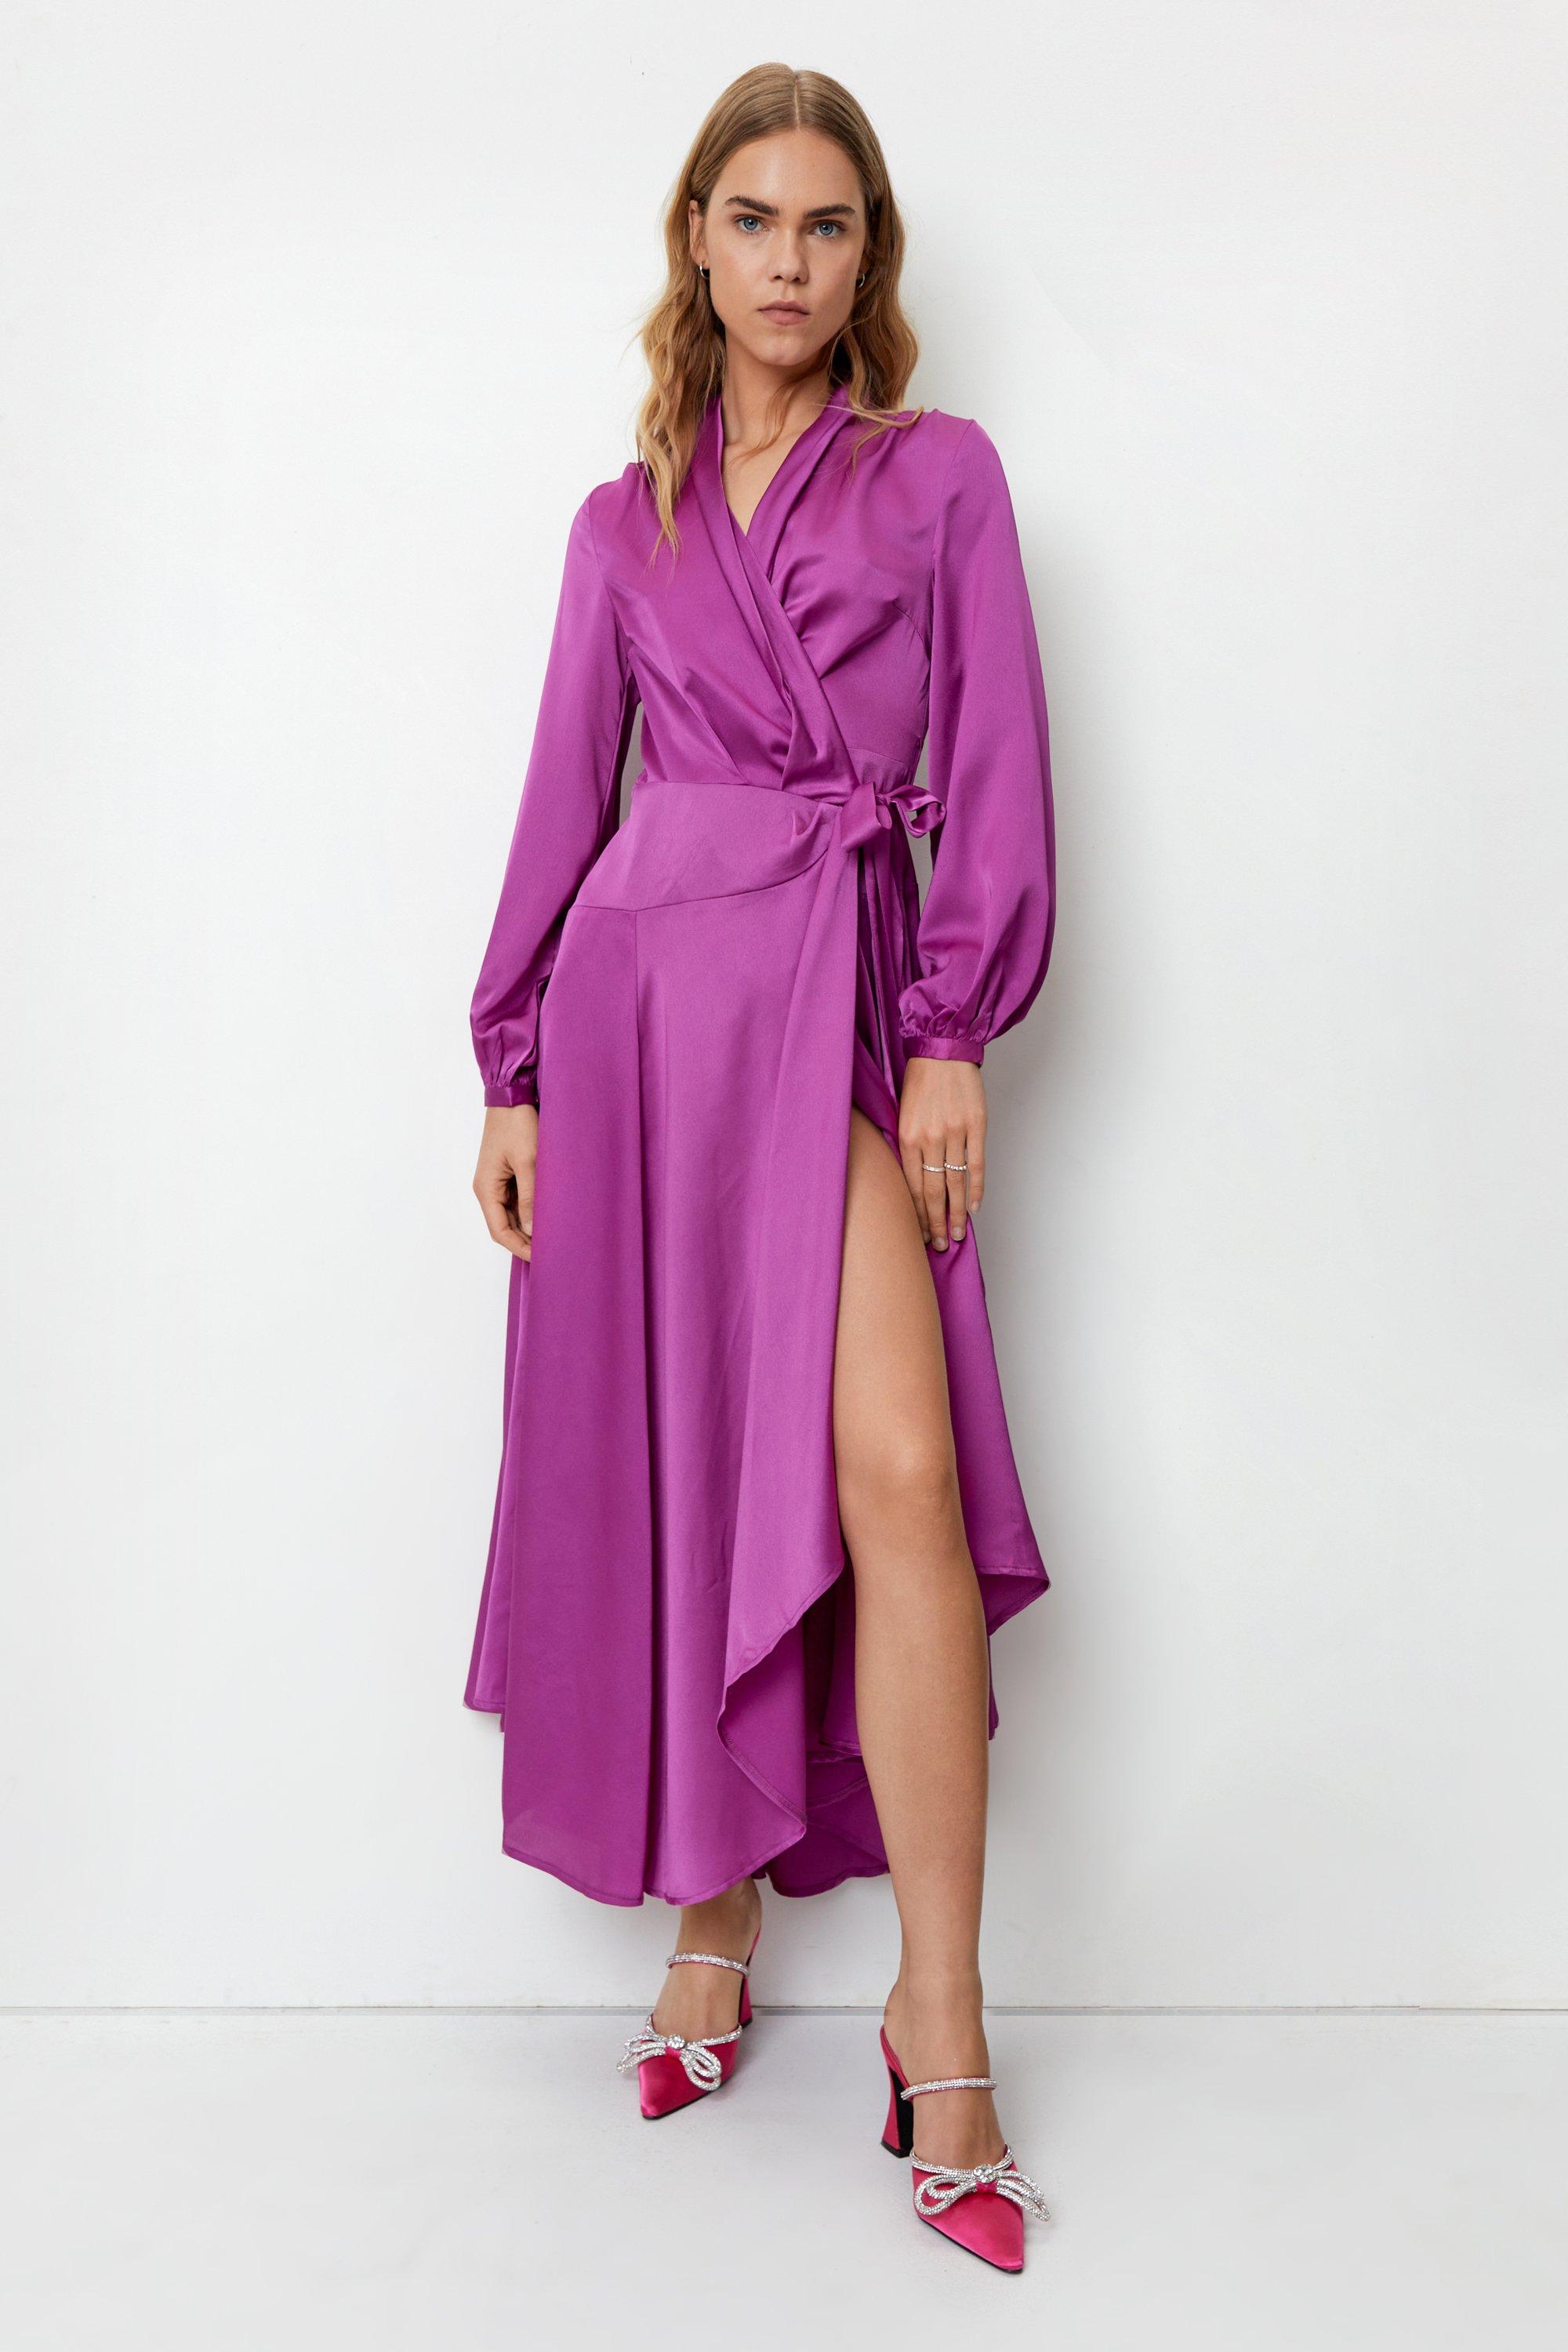 purple satin dress long